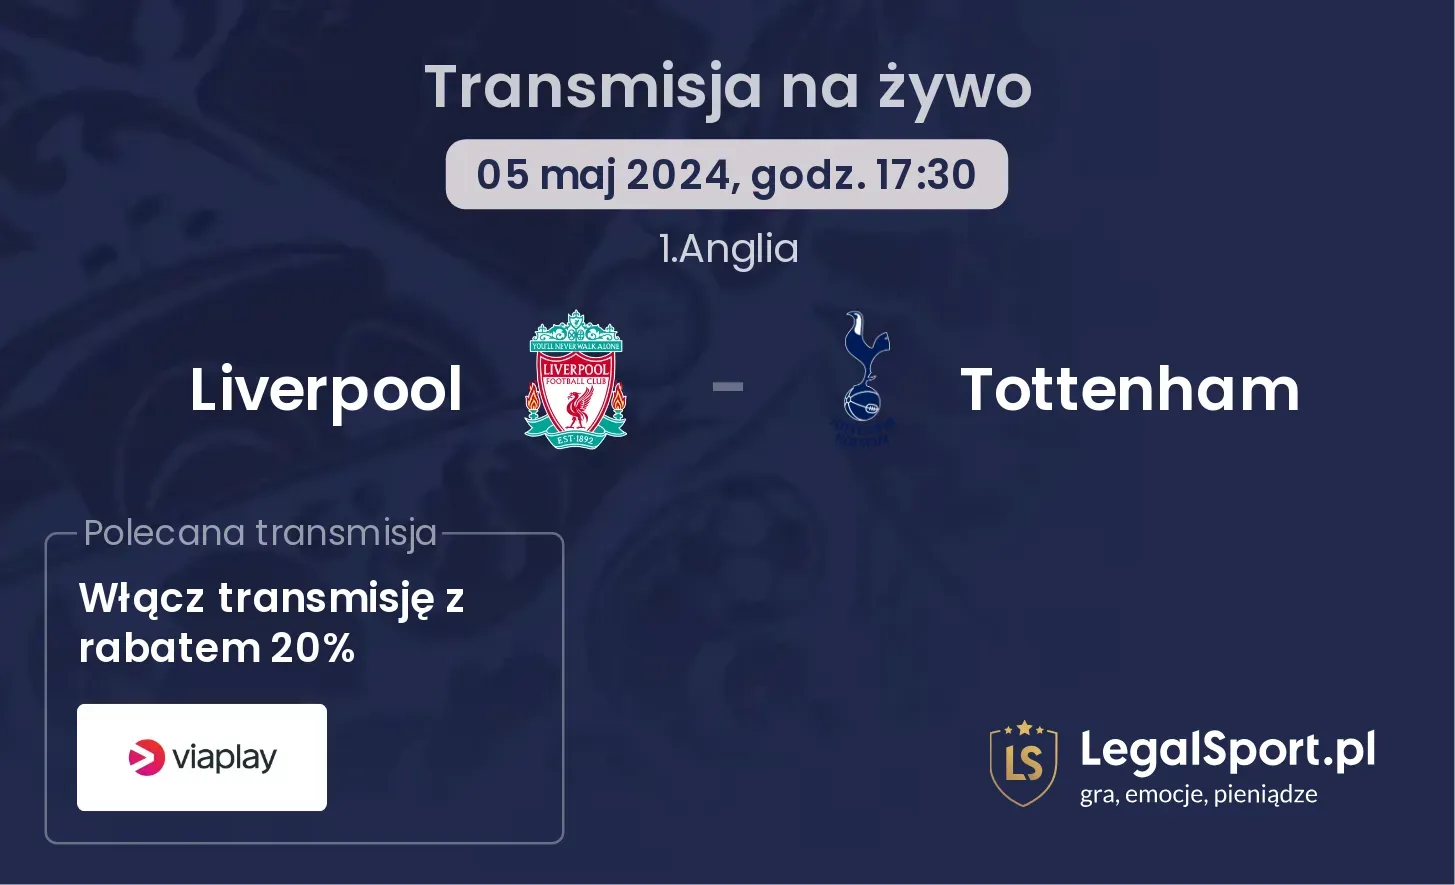 Liverpool - Tottenham transmisja na żywo